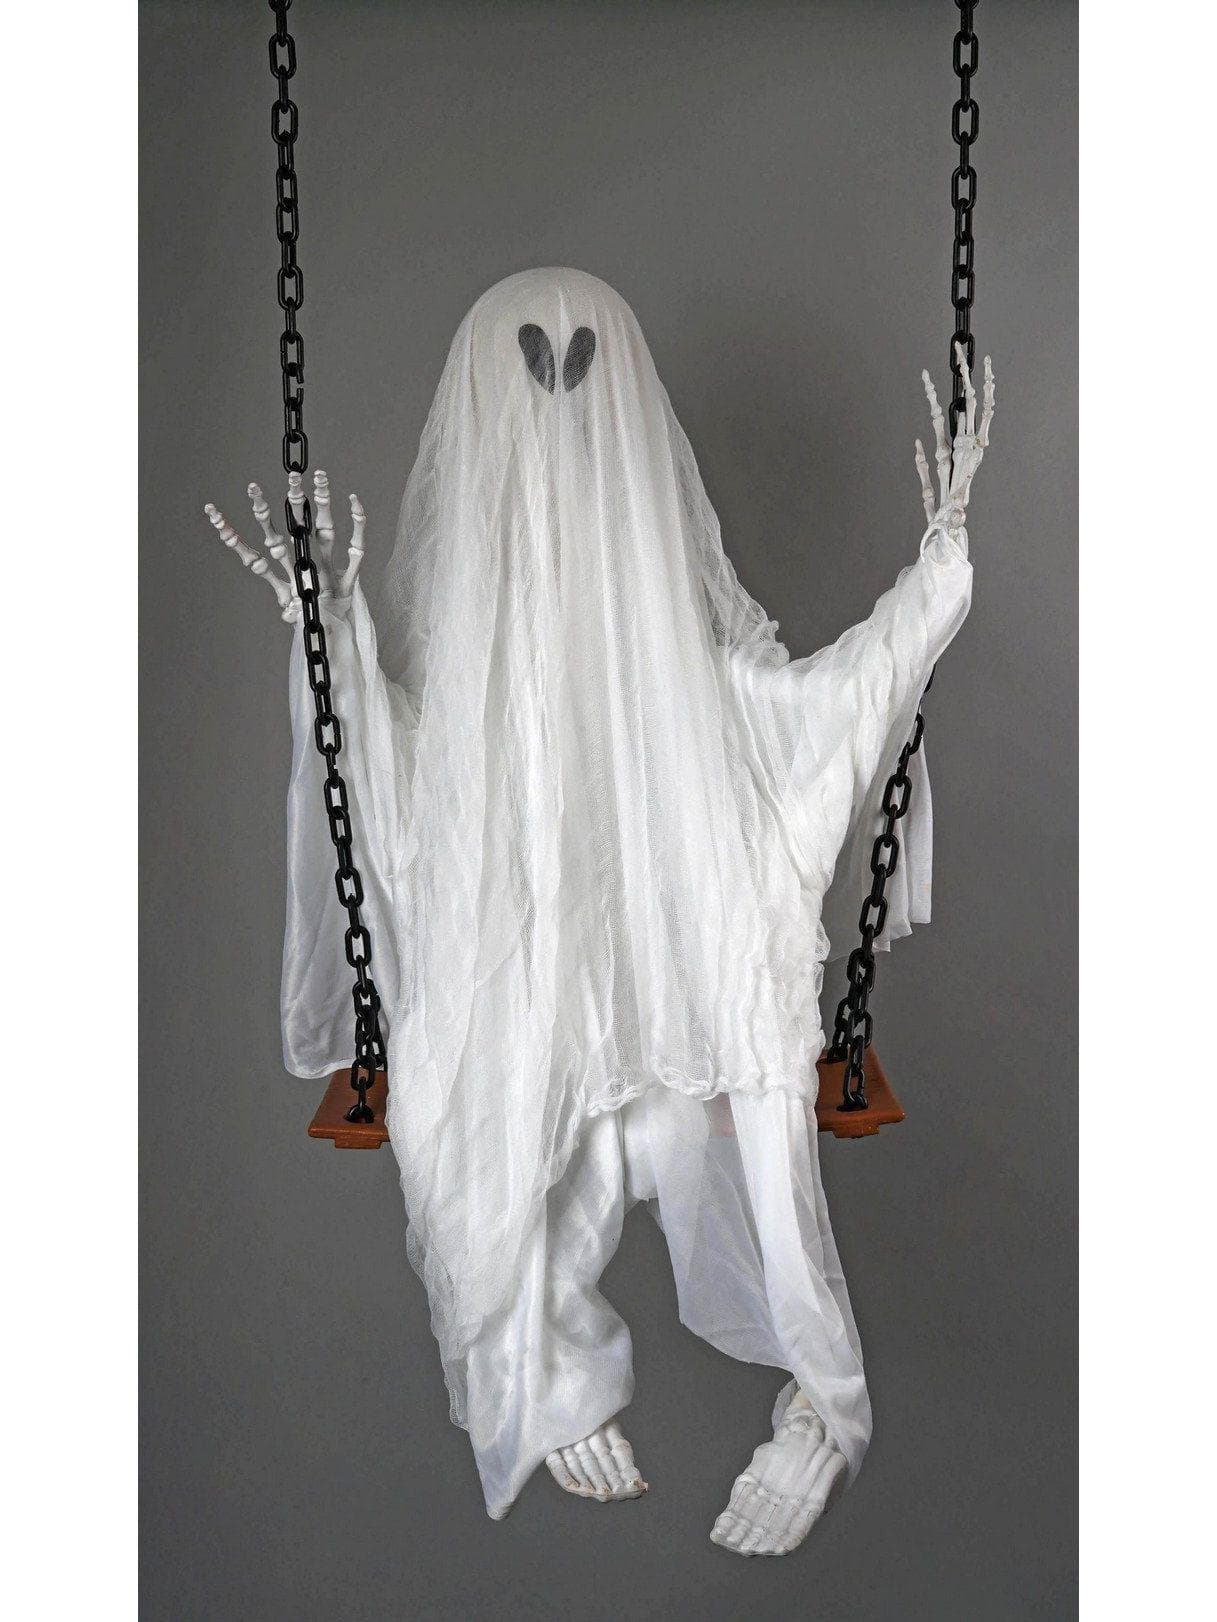 60-inch Hanging Skeleton Ghost Swing - costumes.com